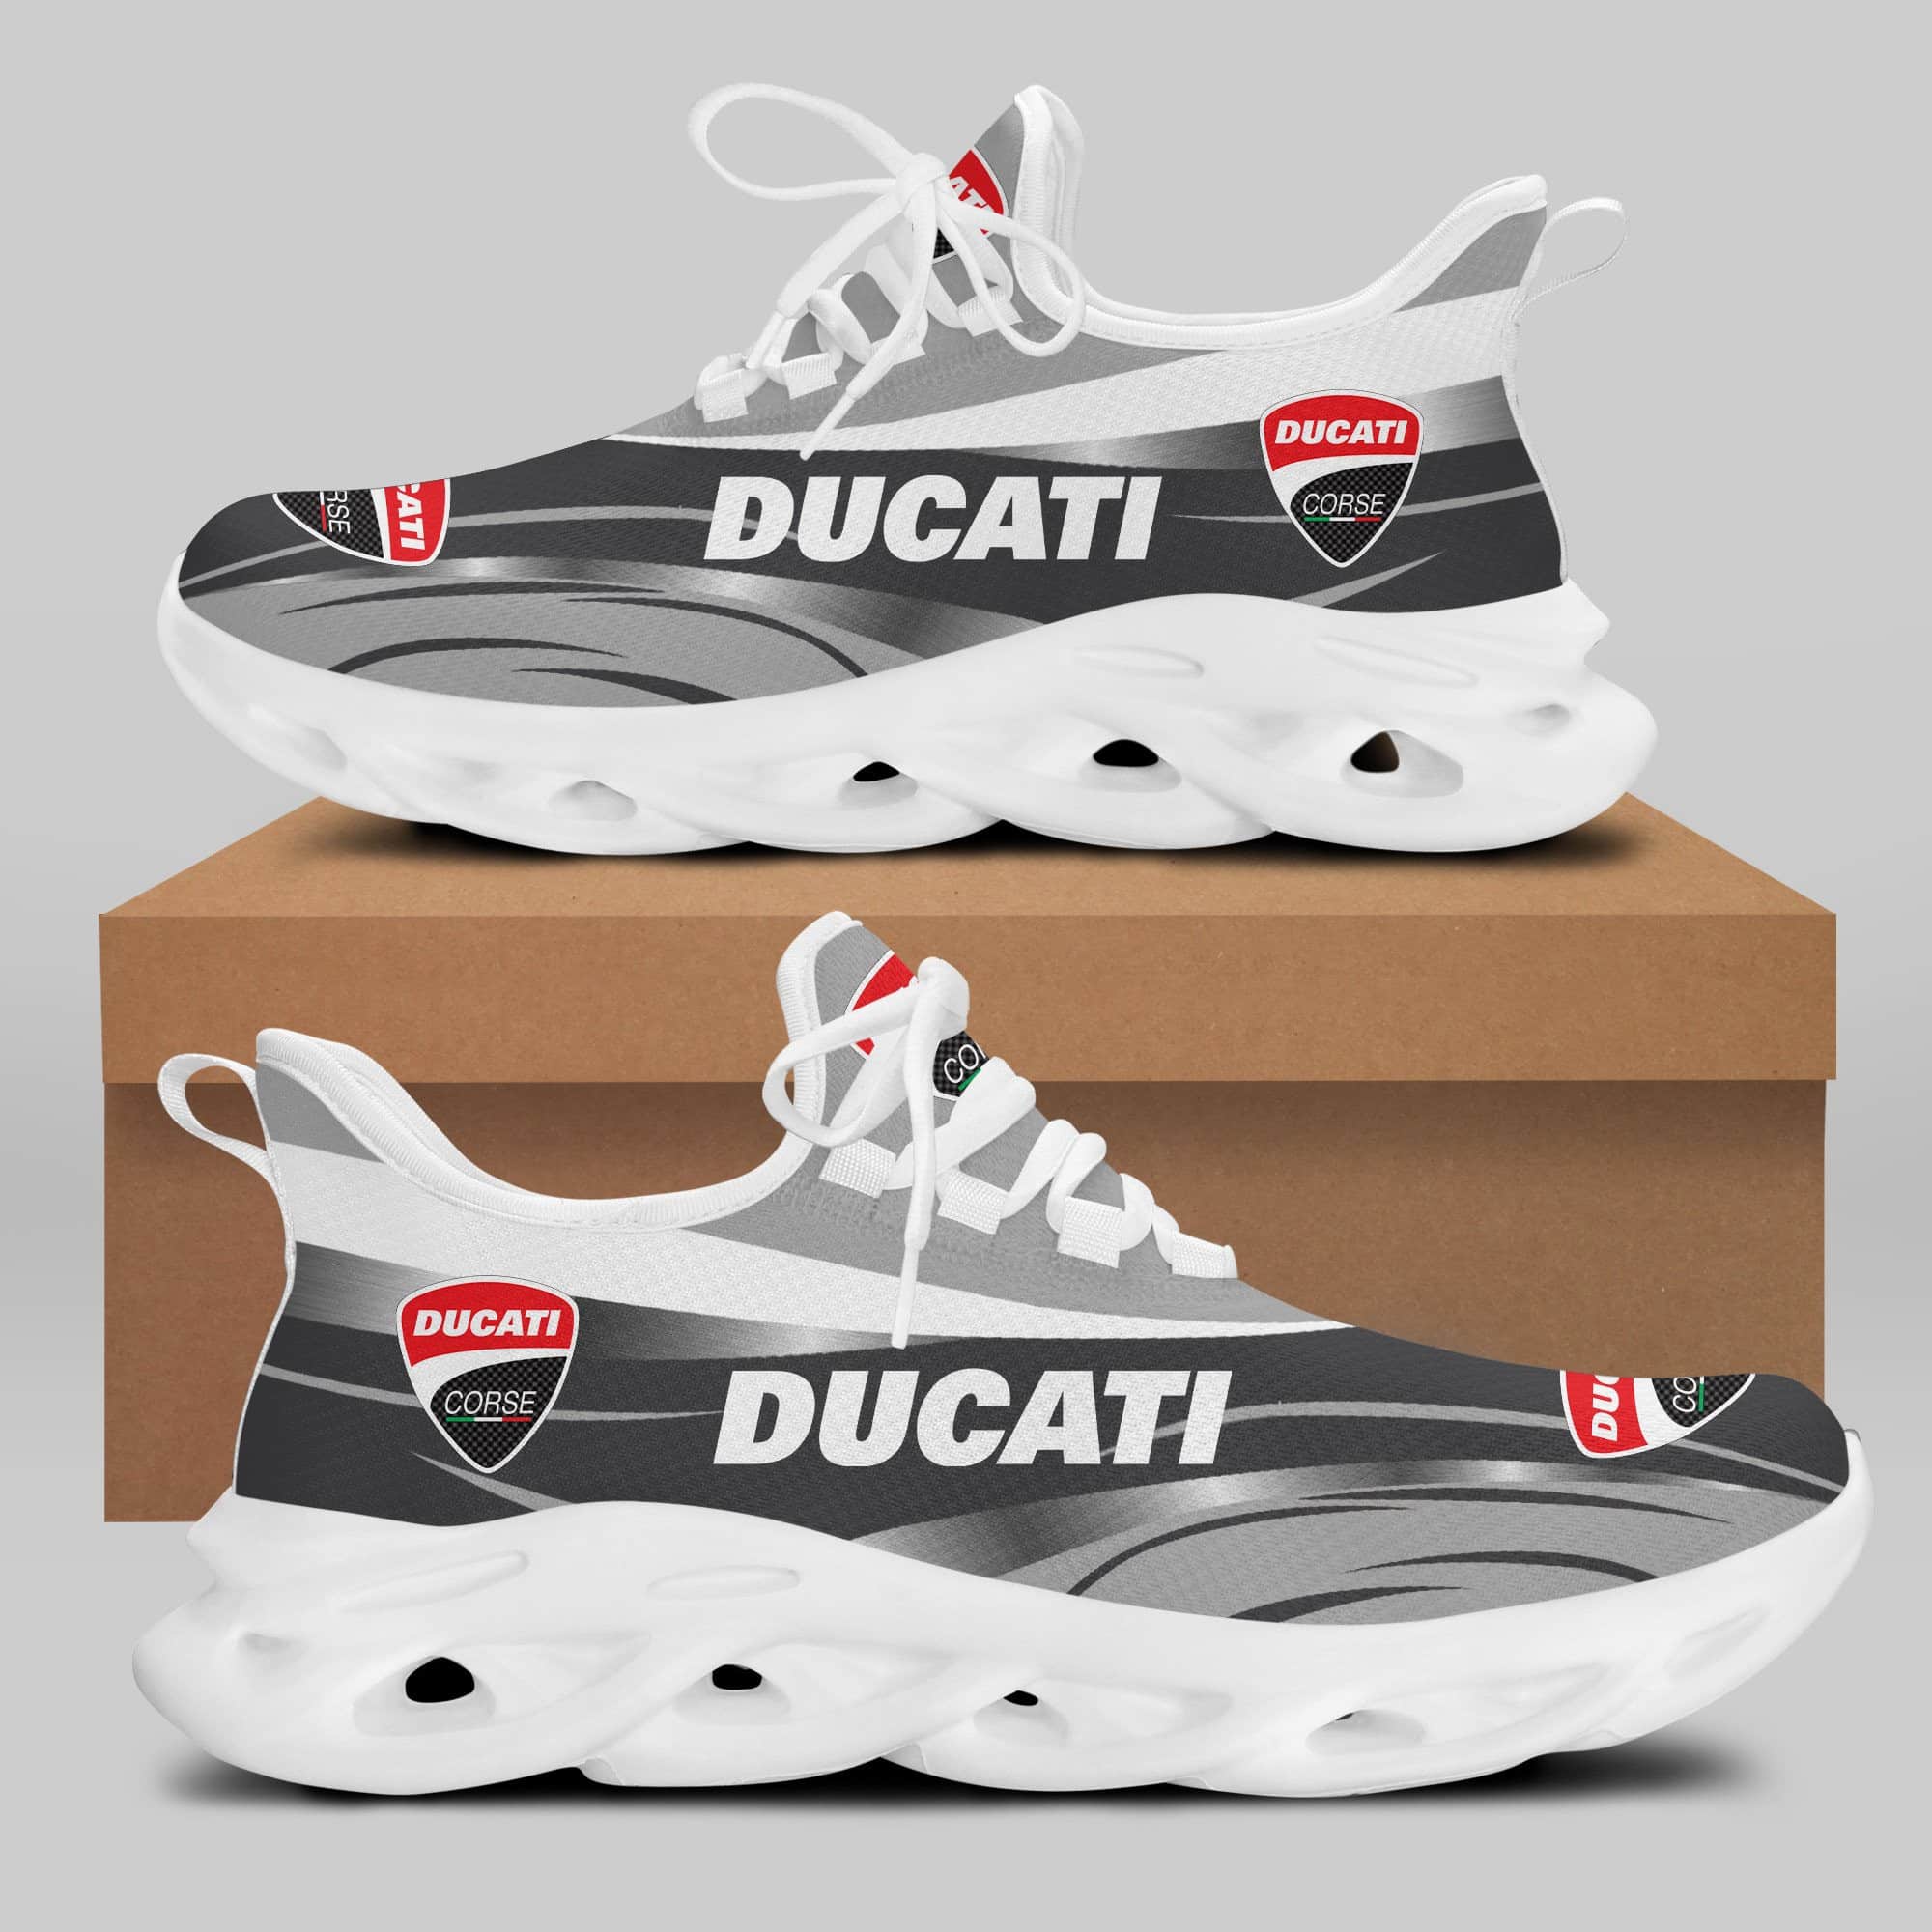 Ducati Racing Running Shoes Max Soul Shoes Sneakers Ver 56 1